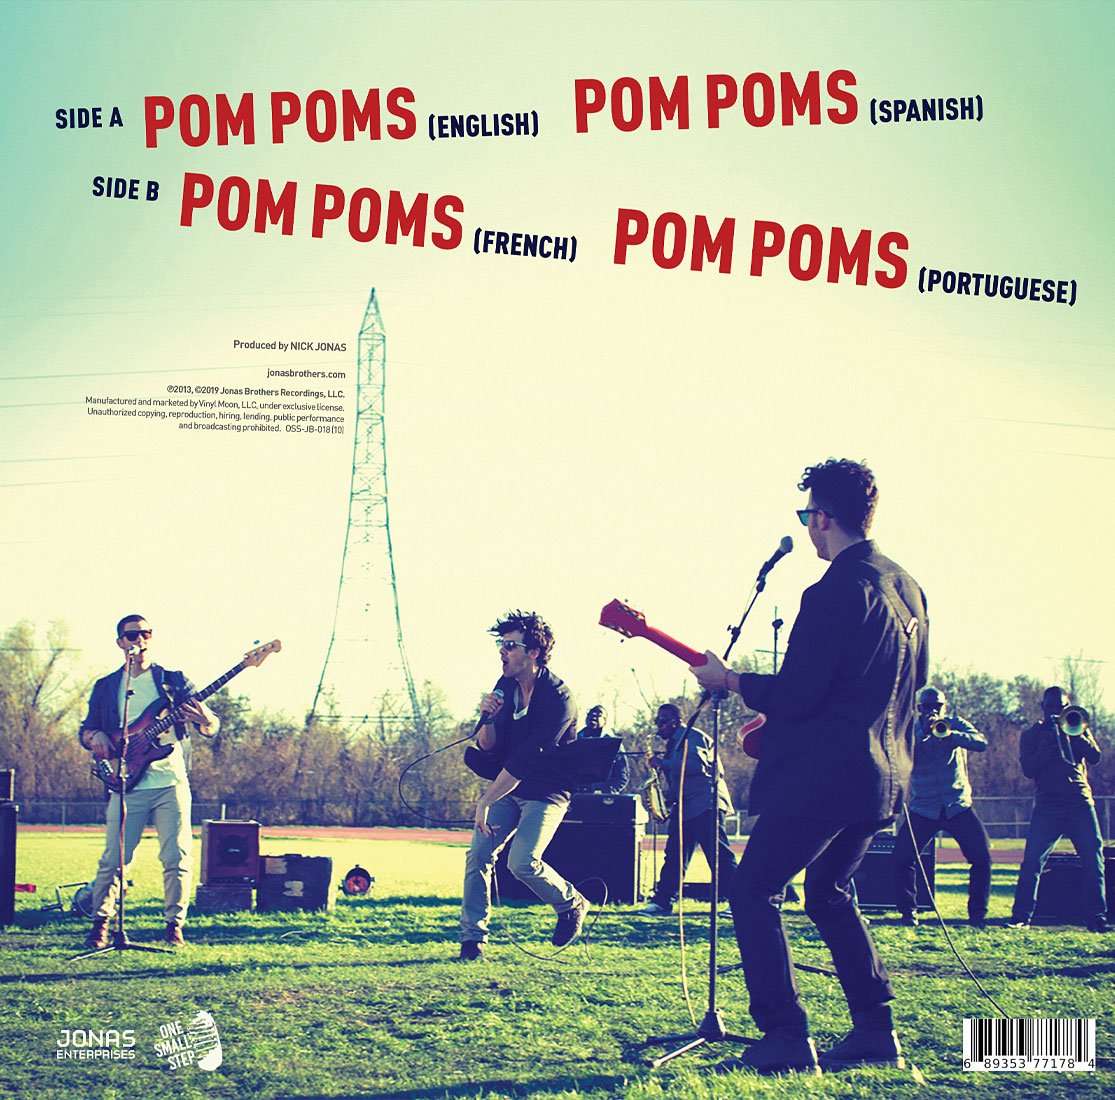 HOLIDAY BUNDLE: Jonas Brothers "V" LP (clear vinyl) + Pom Poms (yellow & red splatter vinyl) 10 inch single!